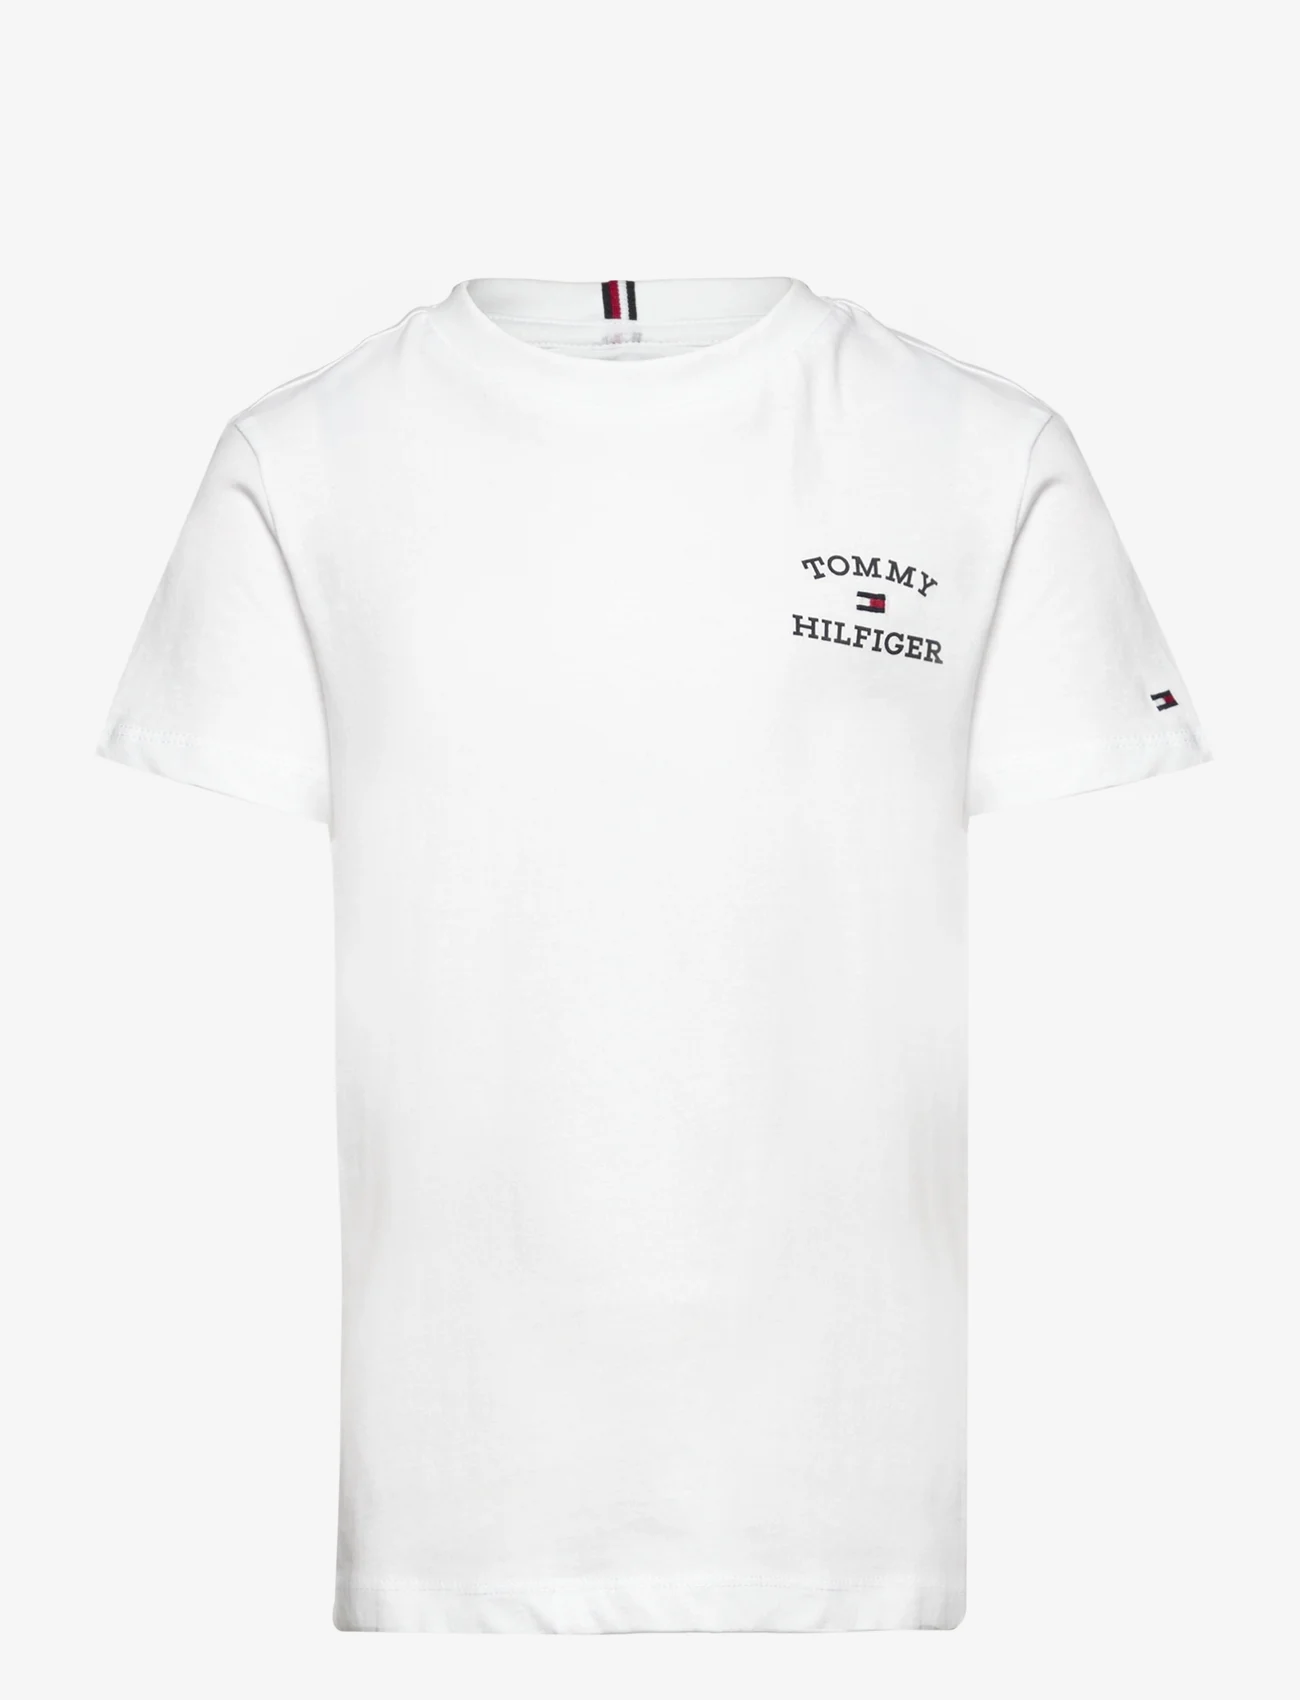 Tommy Hilfiger - TH LOGO TEE S/S - kortærmede t-shirts - white - 0